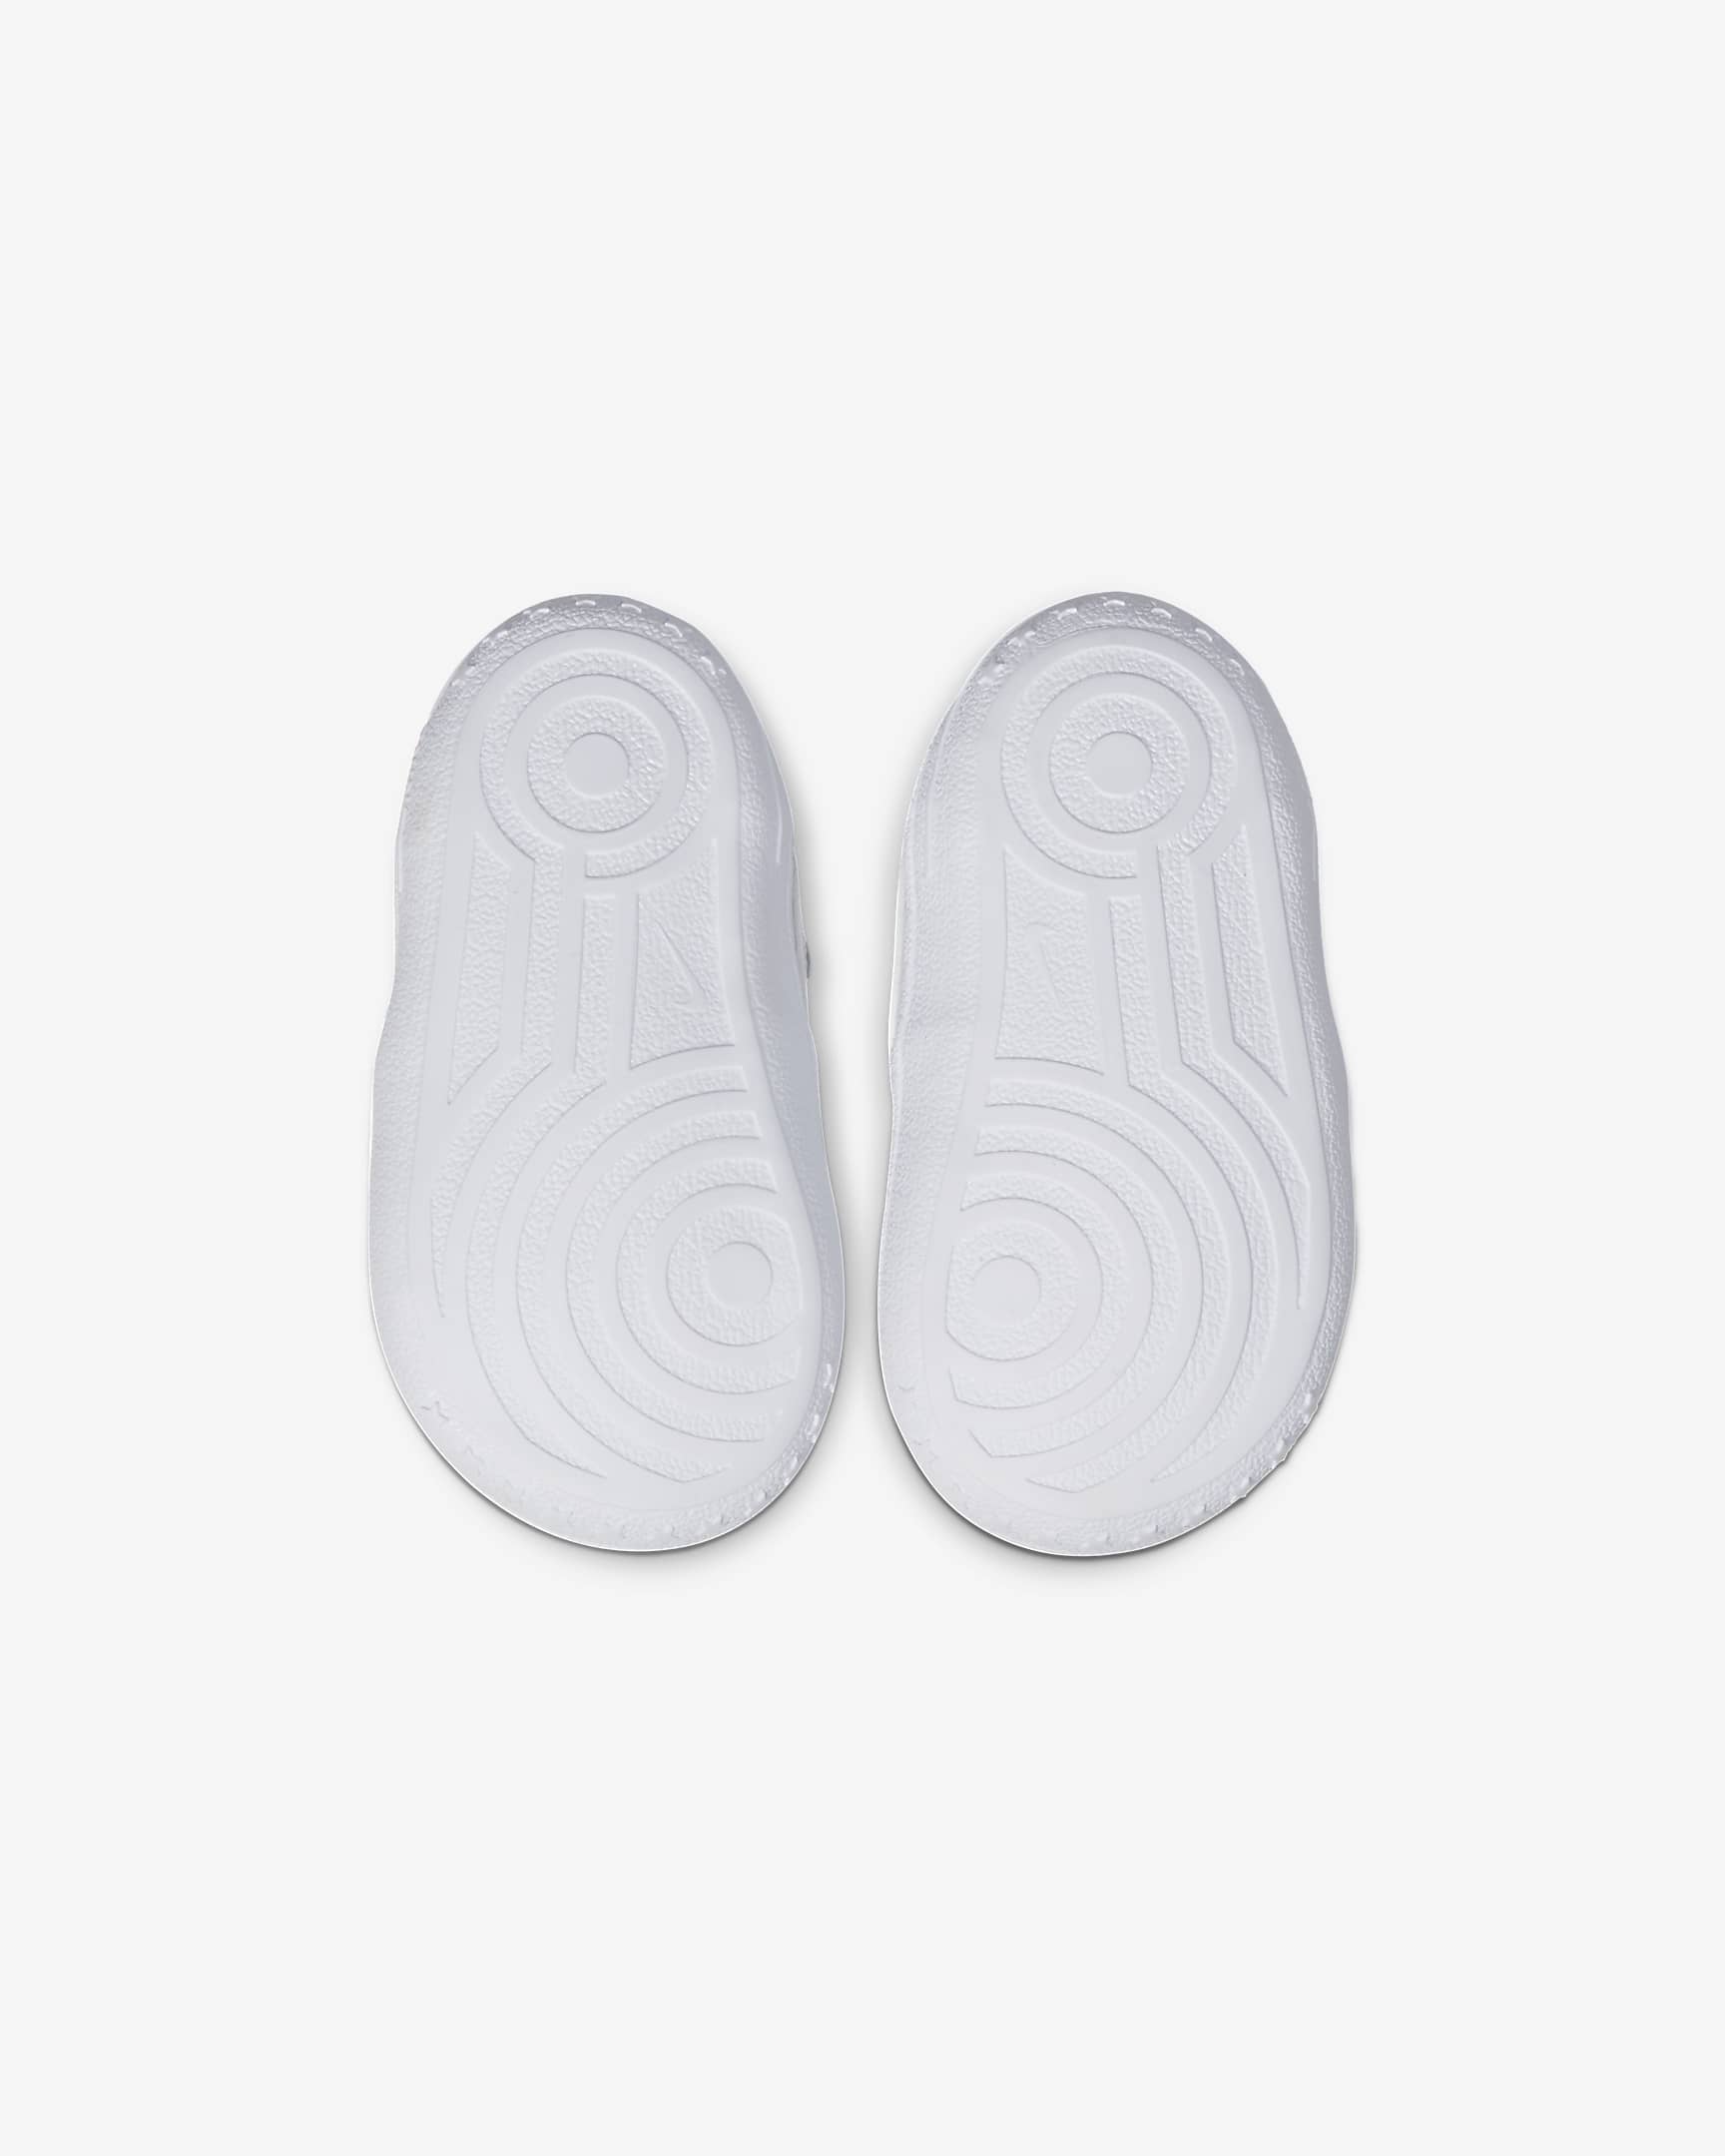 Nike Force 1 Crib cipő babáknak - Fehér/Fehér/Fehér